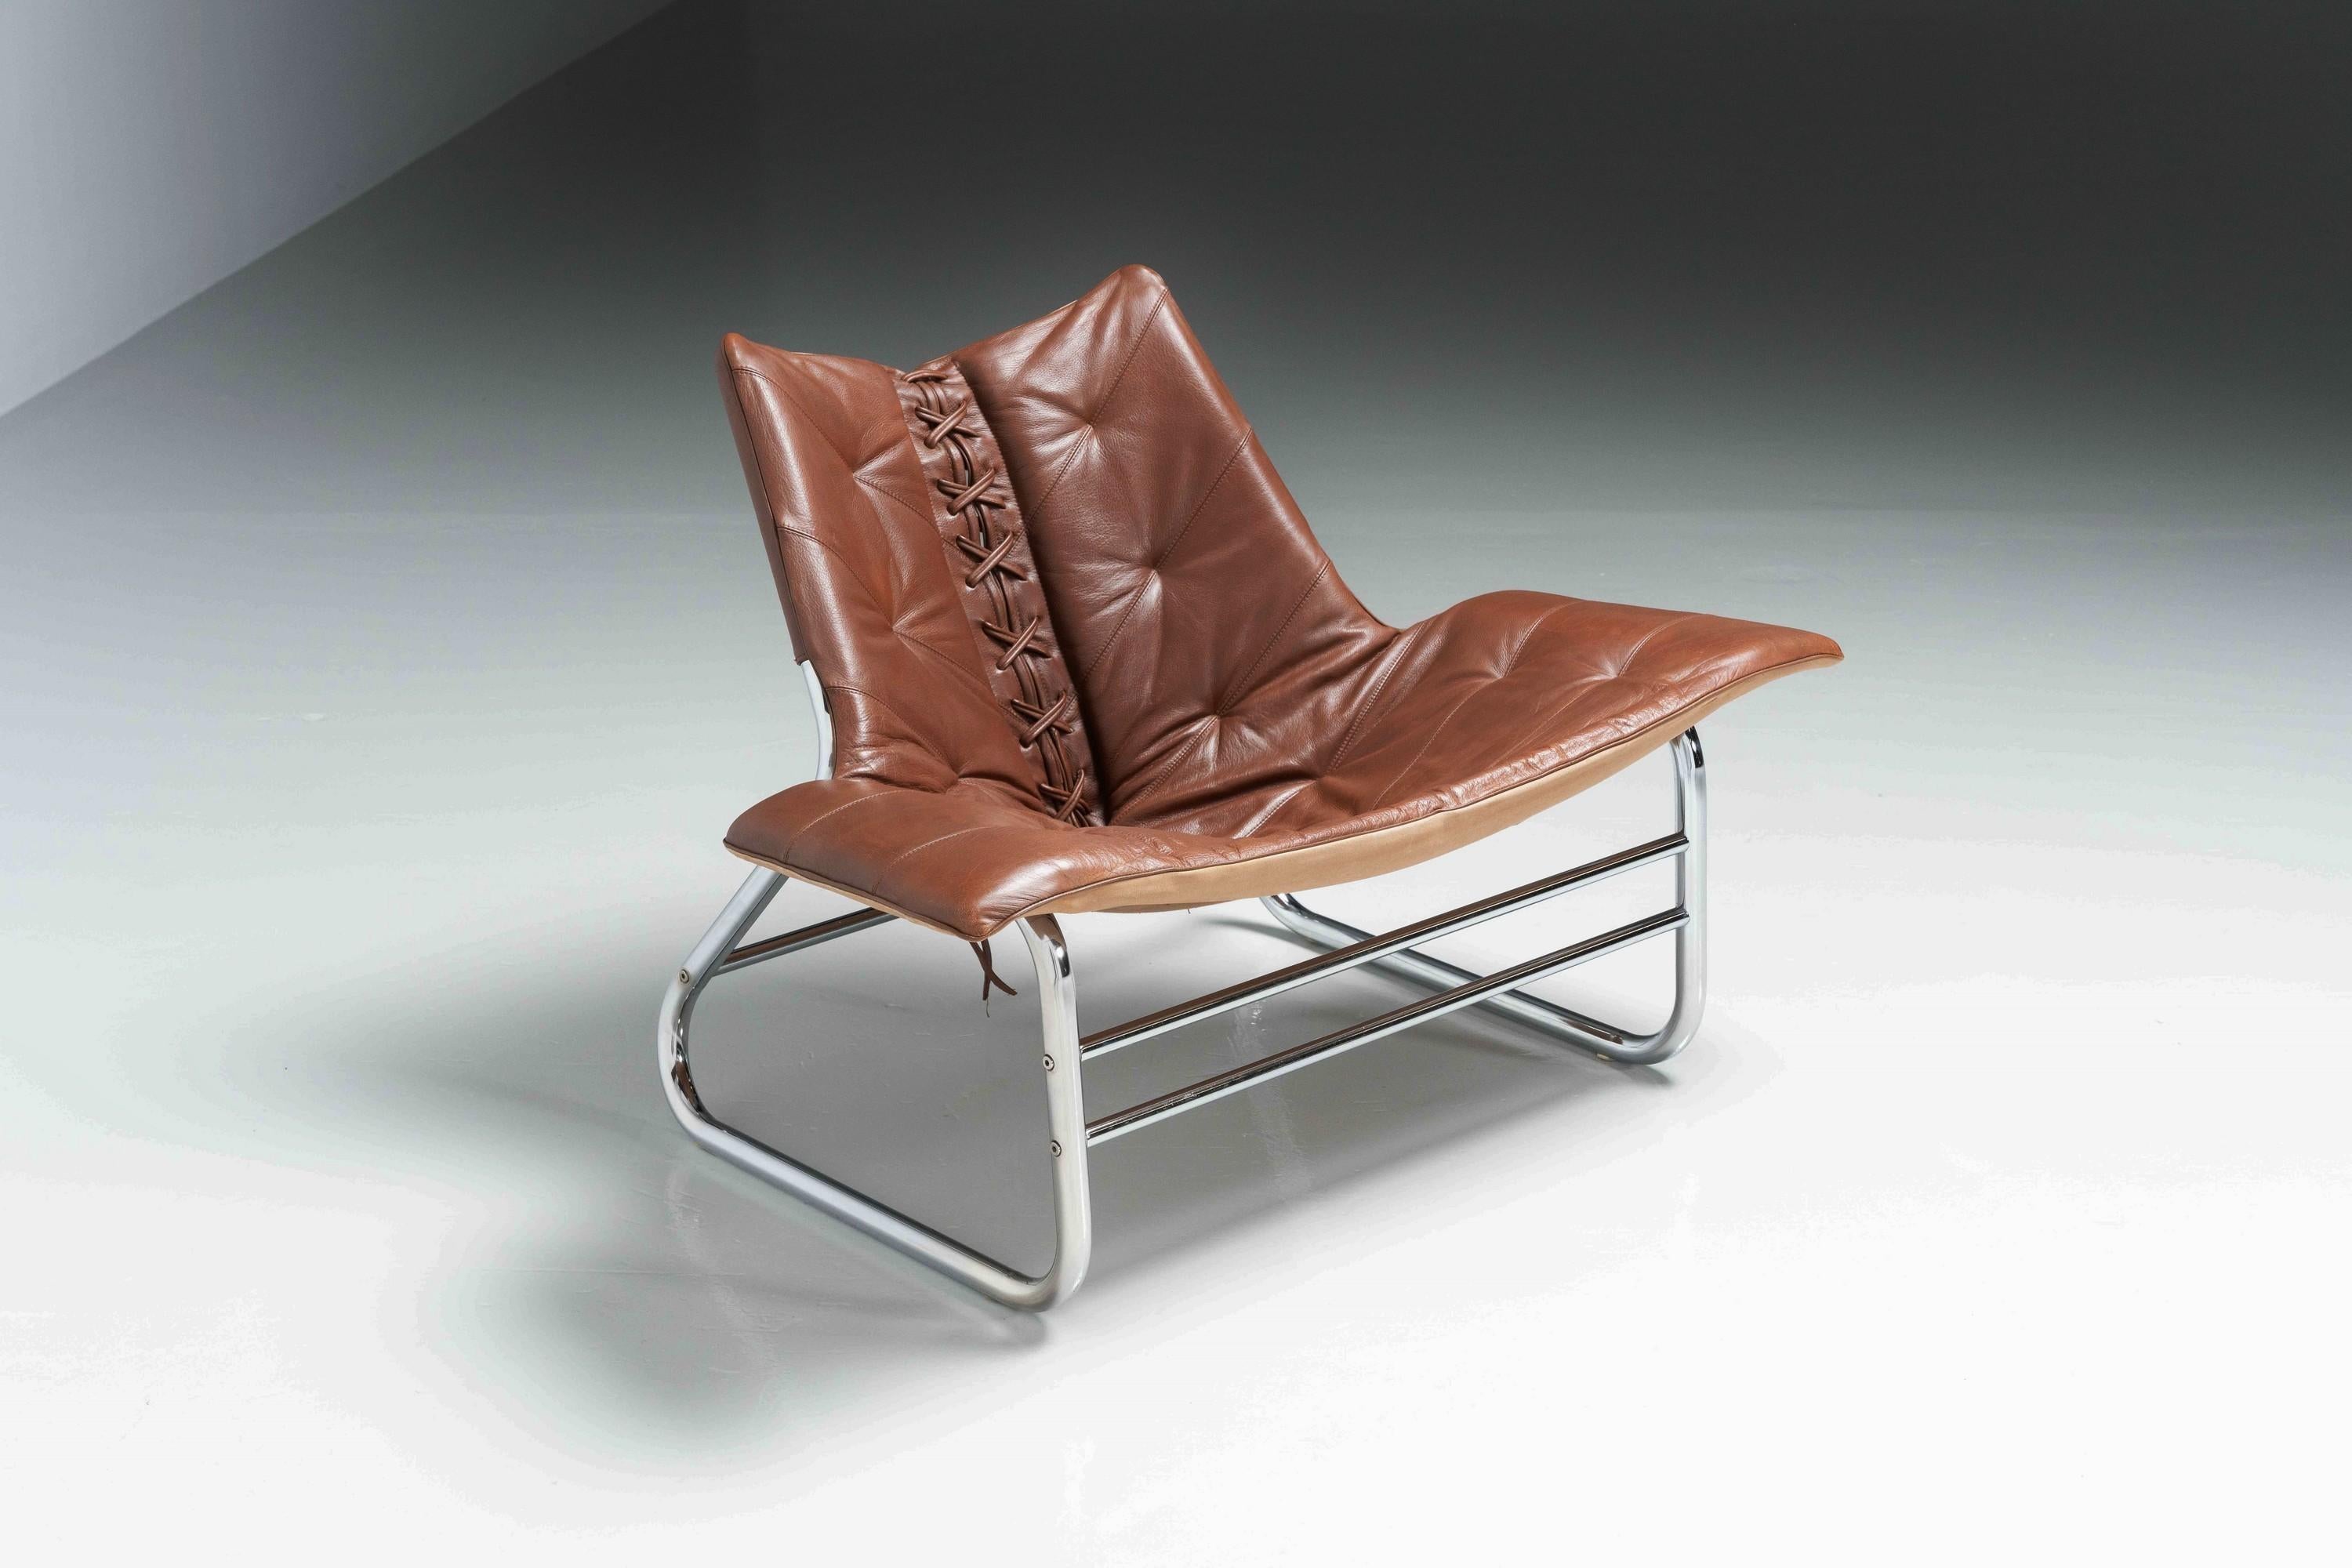 Johan Bertil Corset Lounge Chair Swed-Form Sweden 1970 For Sale at ...